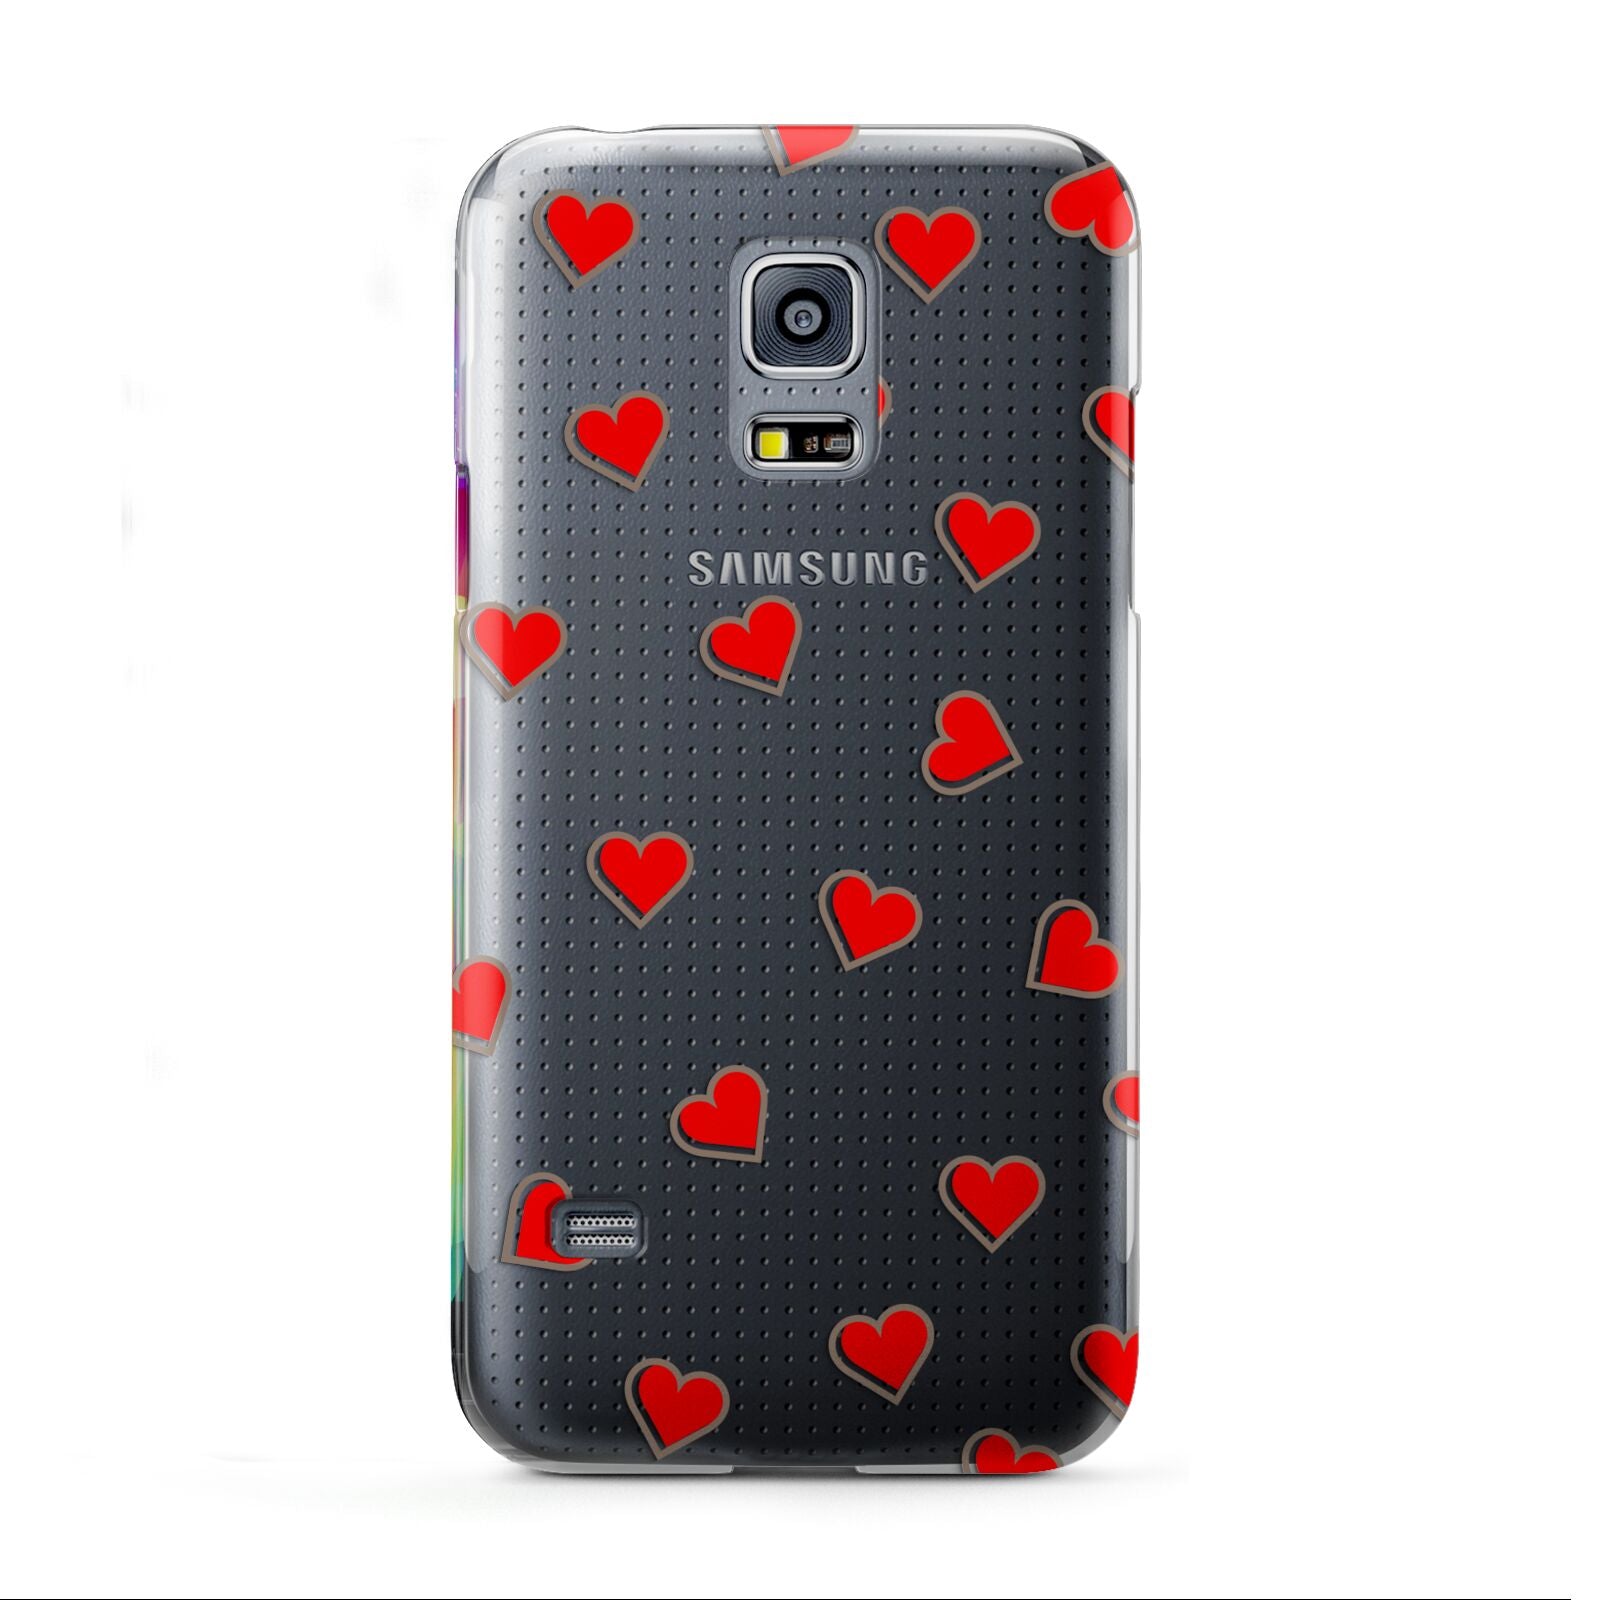 Cute Red Hearts Samsung Galaxy S5 Mini Case